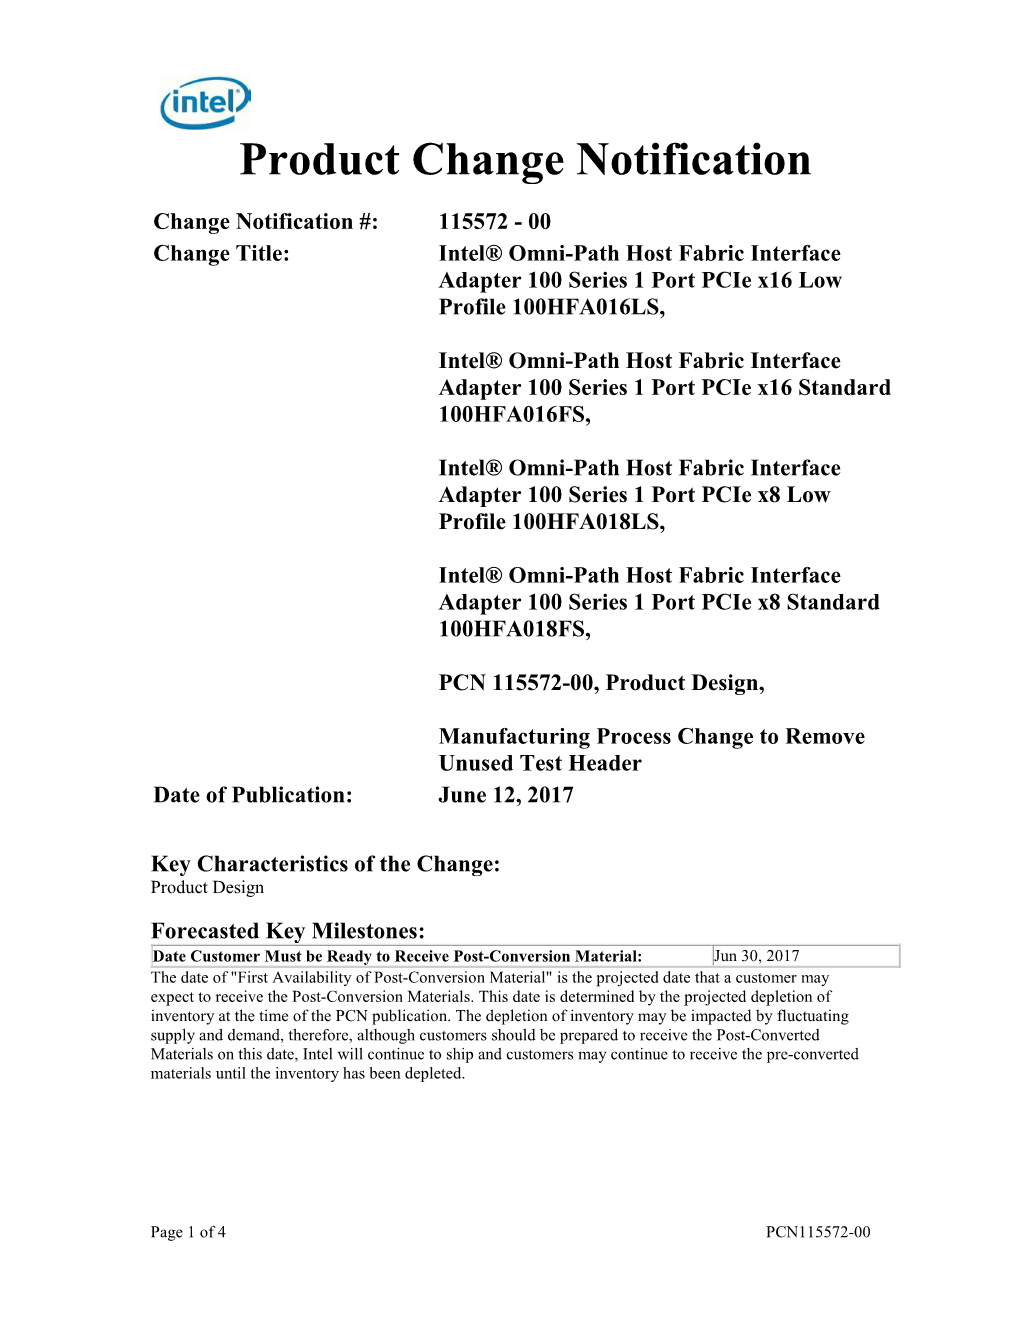 Product Change Notification 115572 - 00